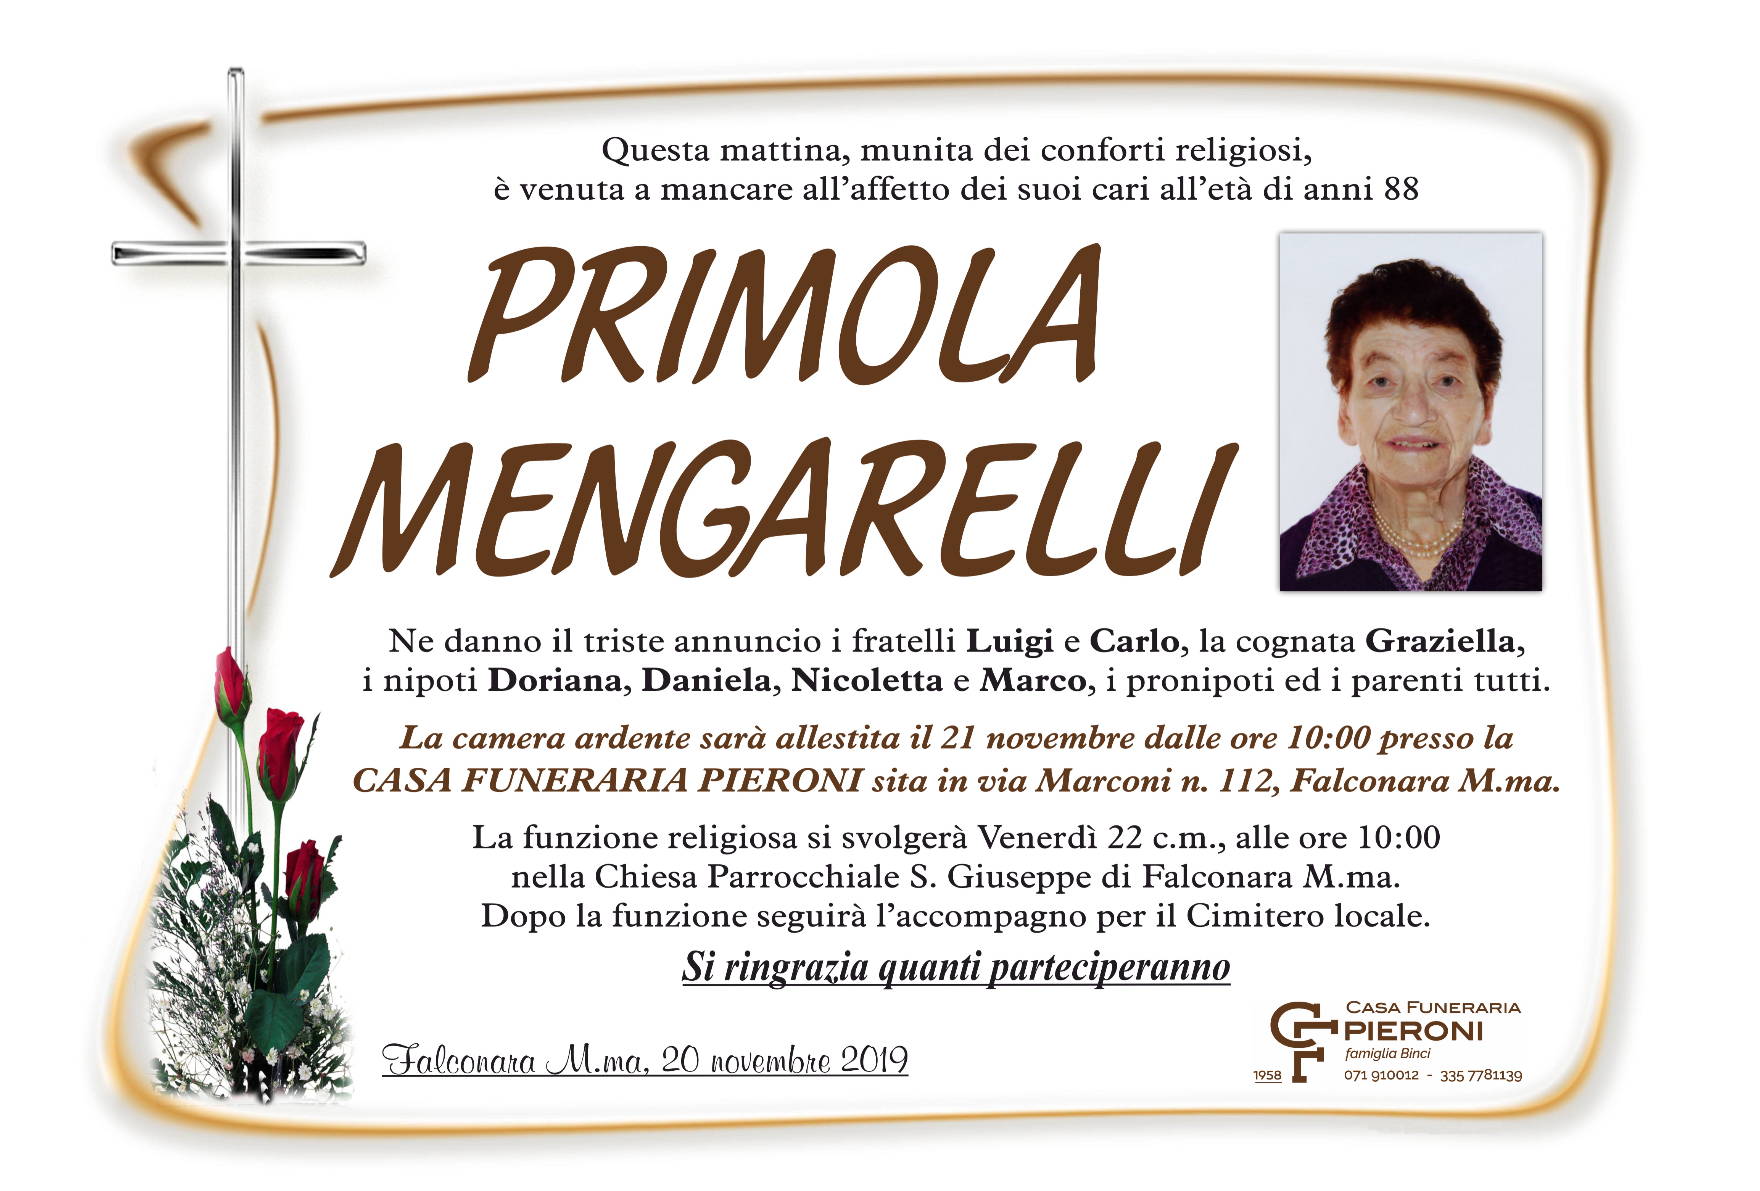 Primola Mengarelli